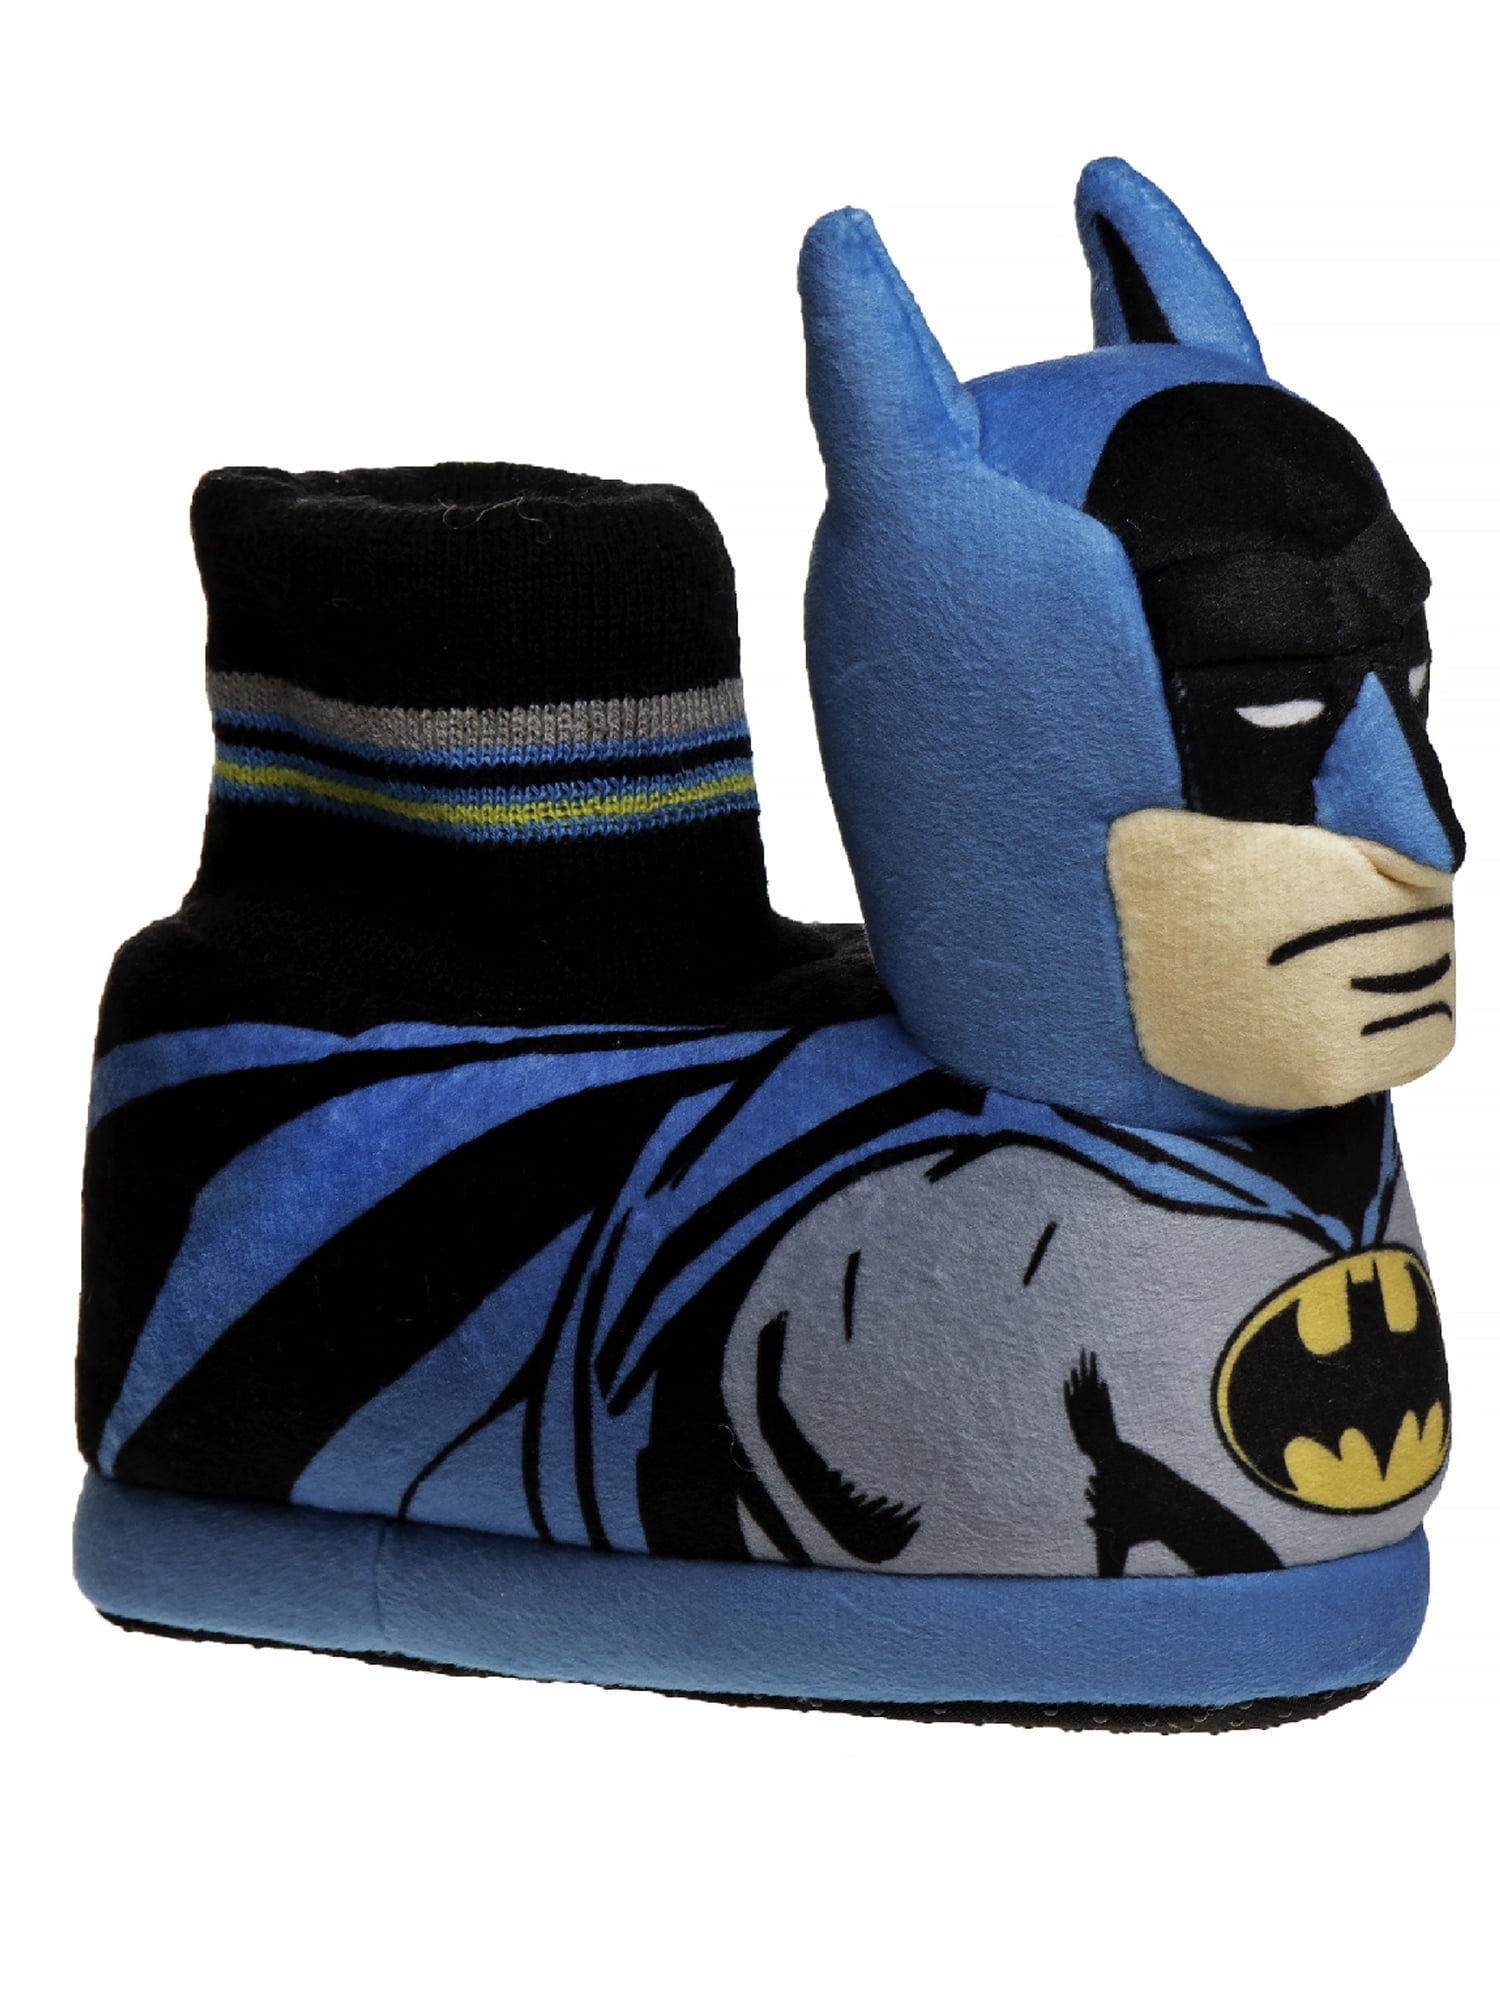 Kids Toddler Baby Anti-slip Sock Boots Slipper Shoes Moccasin batman superhero 